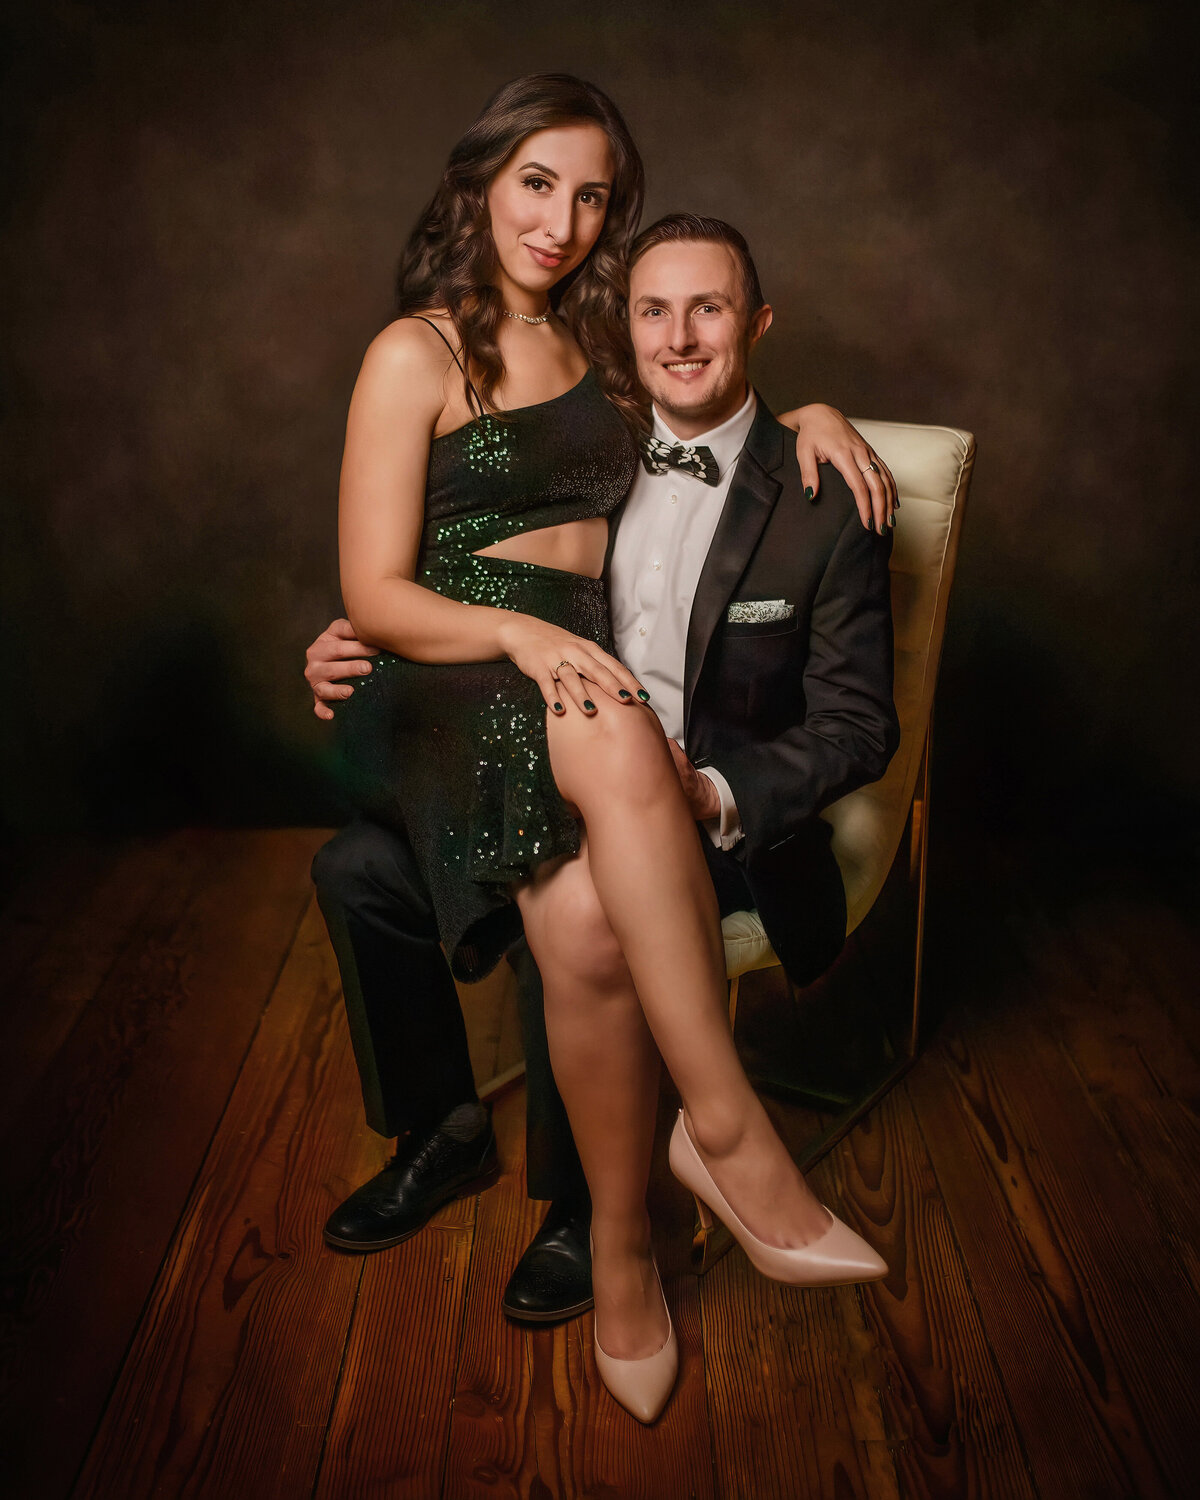 Skagit-County-Couples-Photographer